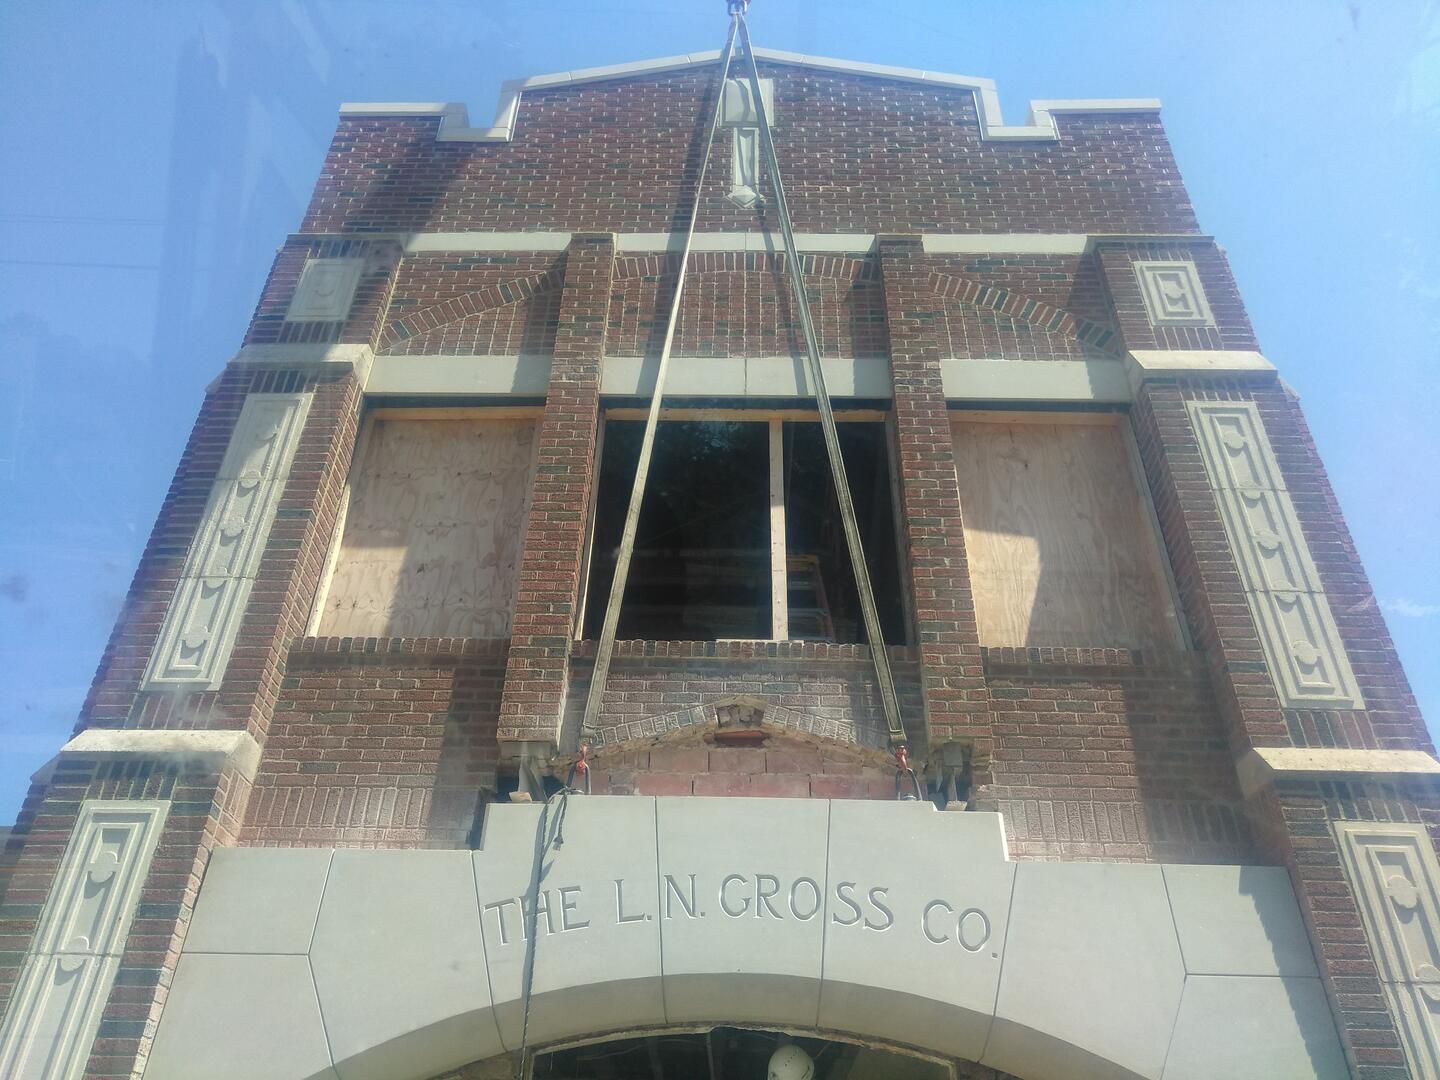 L.N. Gross Building in Kent, build in 1928, restored in 2016-2019